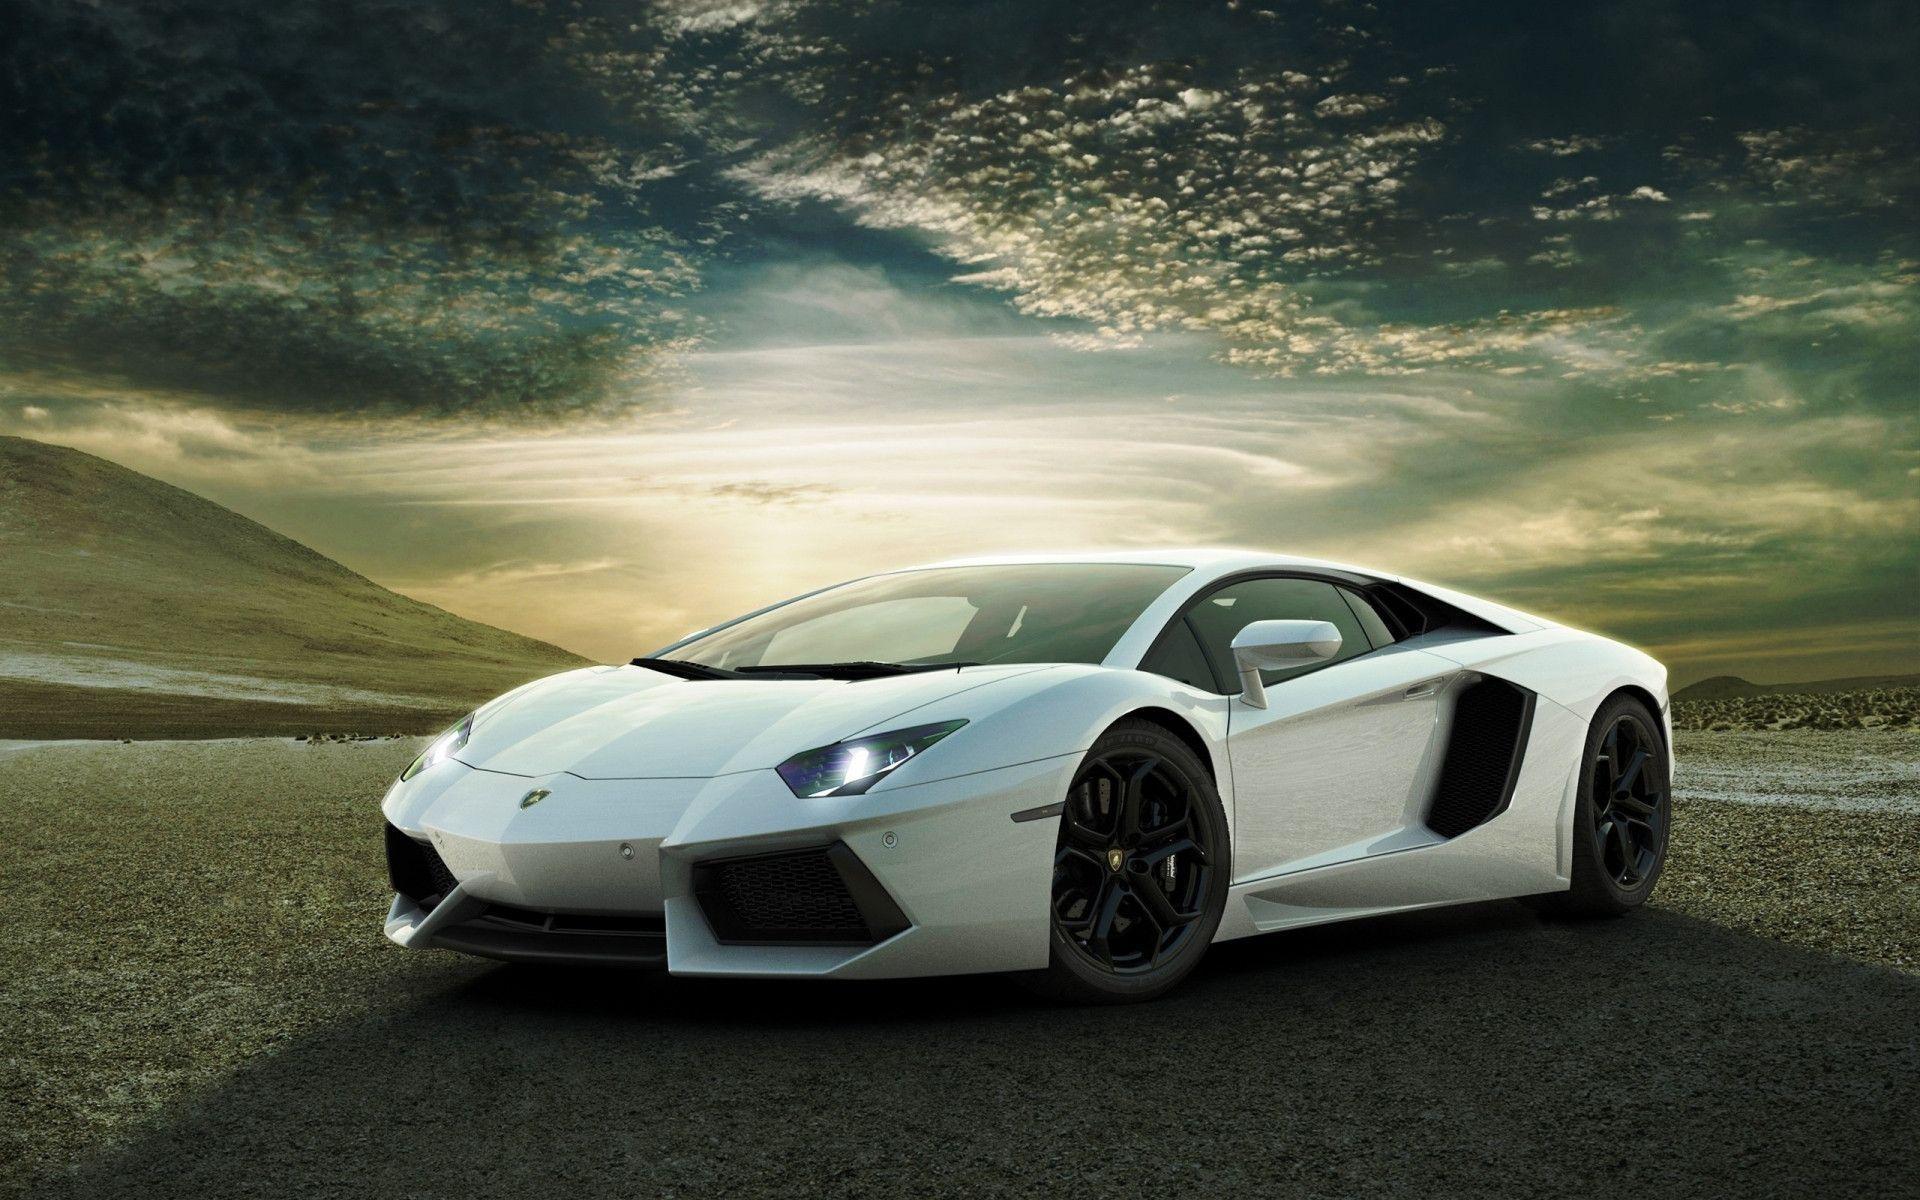 White Lamborghini Background in Cars